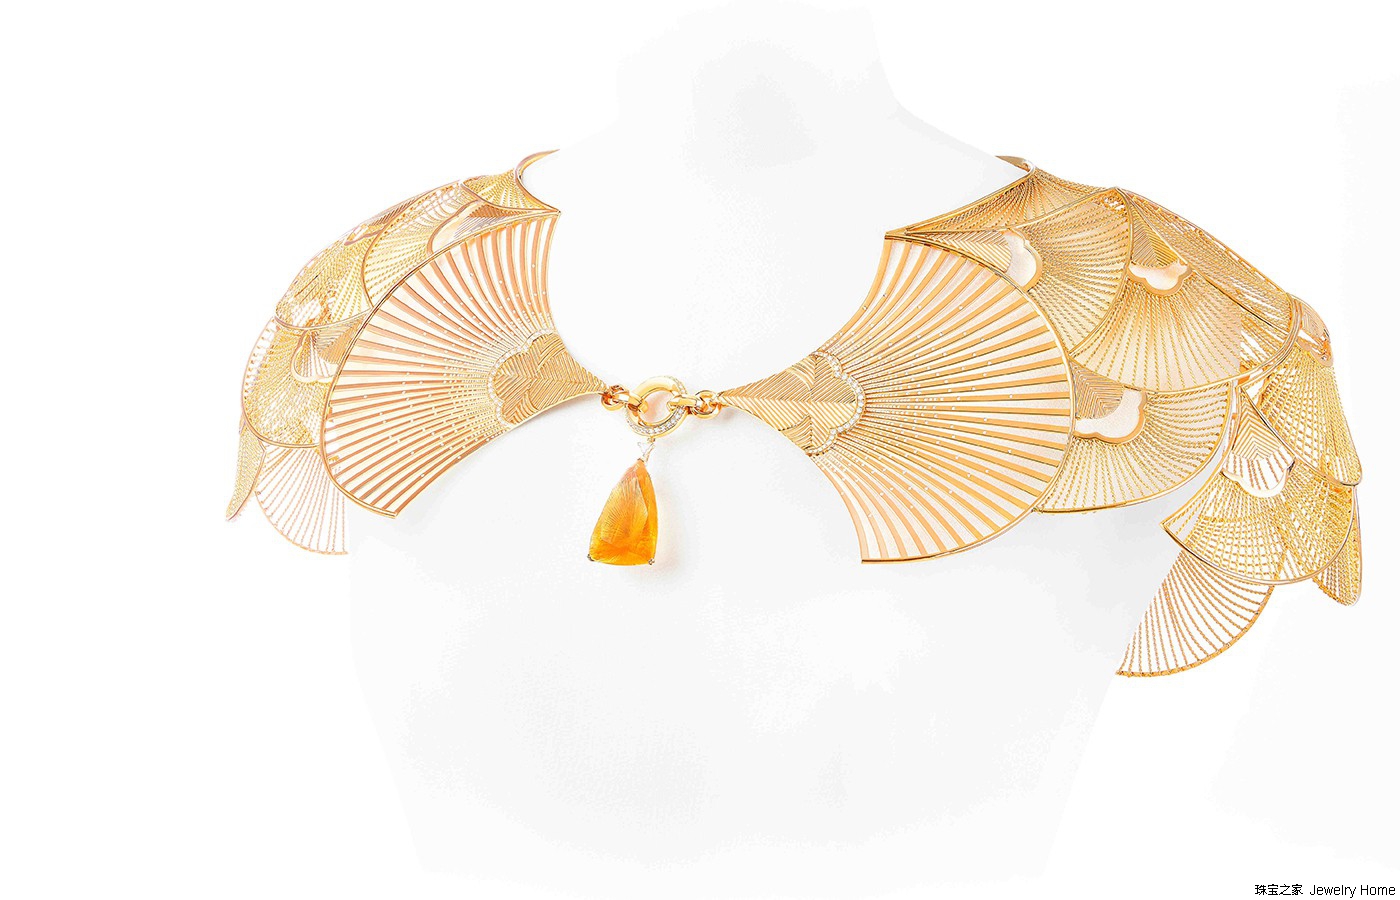 Boucheron宝诗龙华丽霓裳系列高级珠宝演绎优雅时装风尚